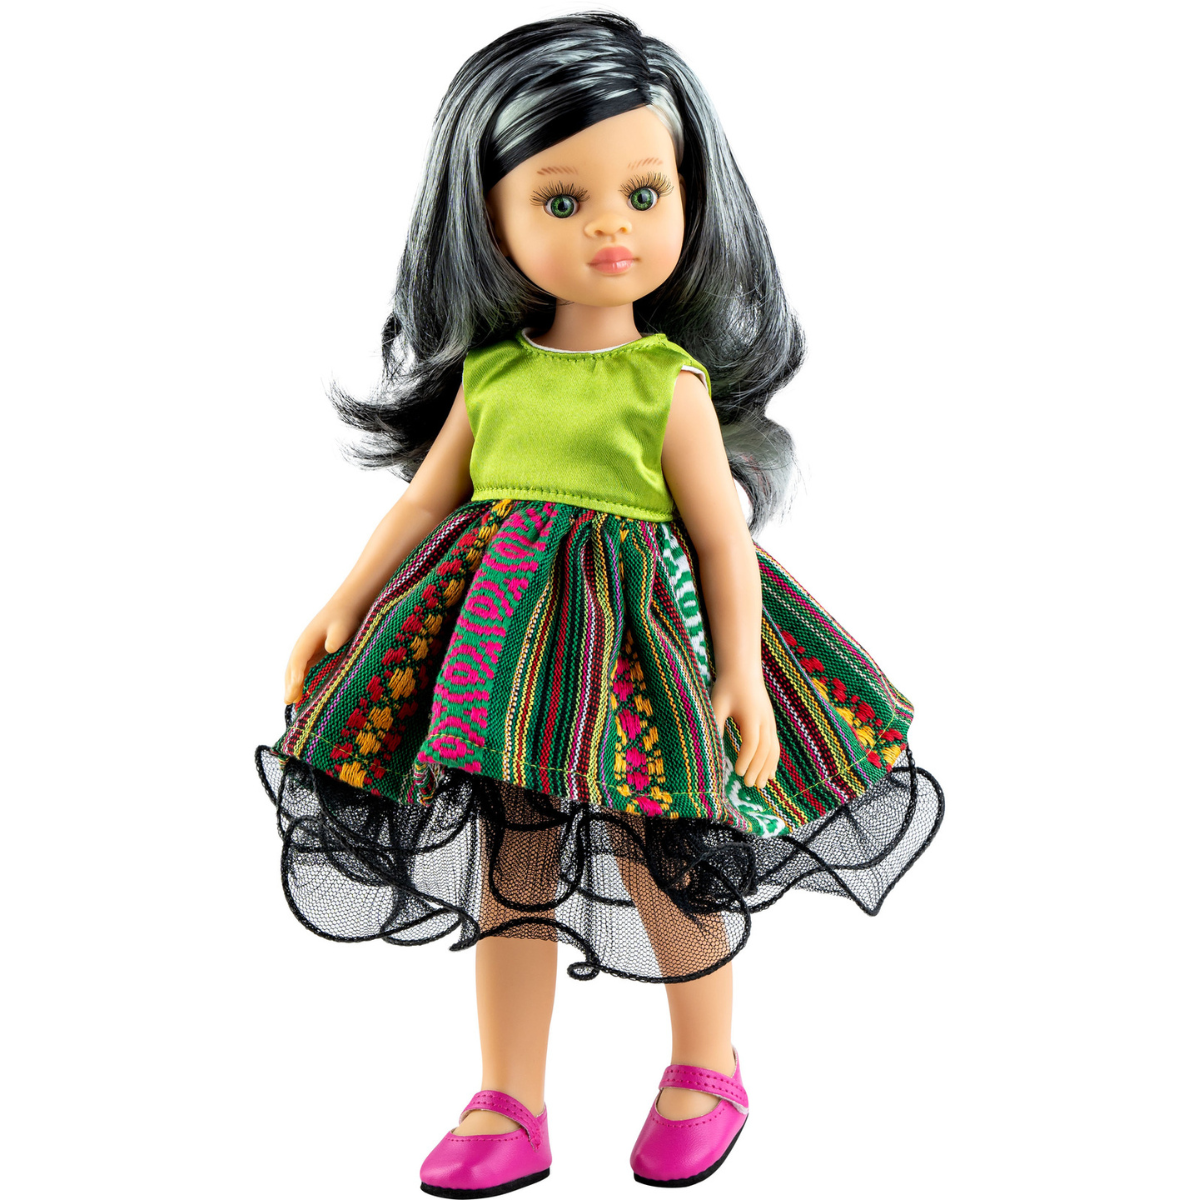 Wonderful Spanish Paola Reina doll 32 cm 04531